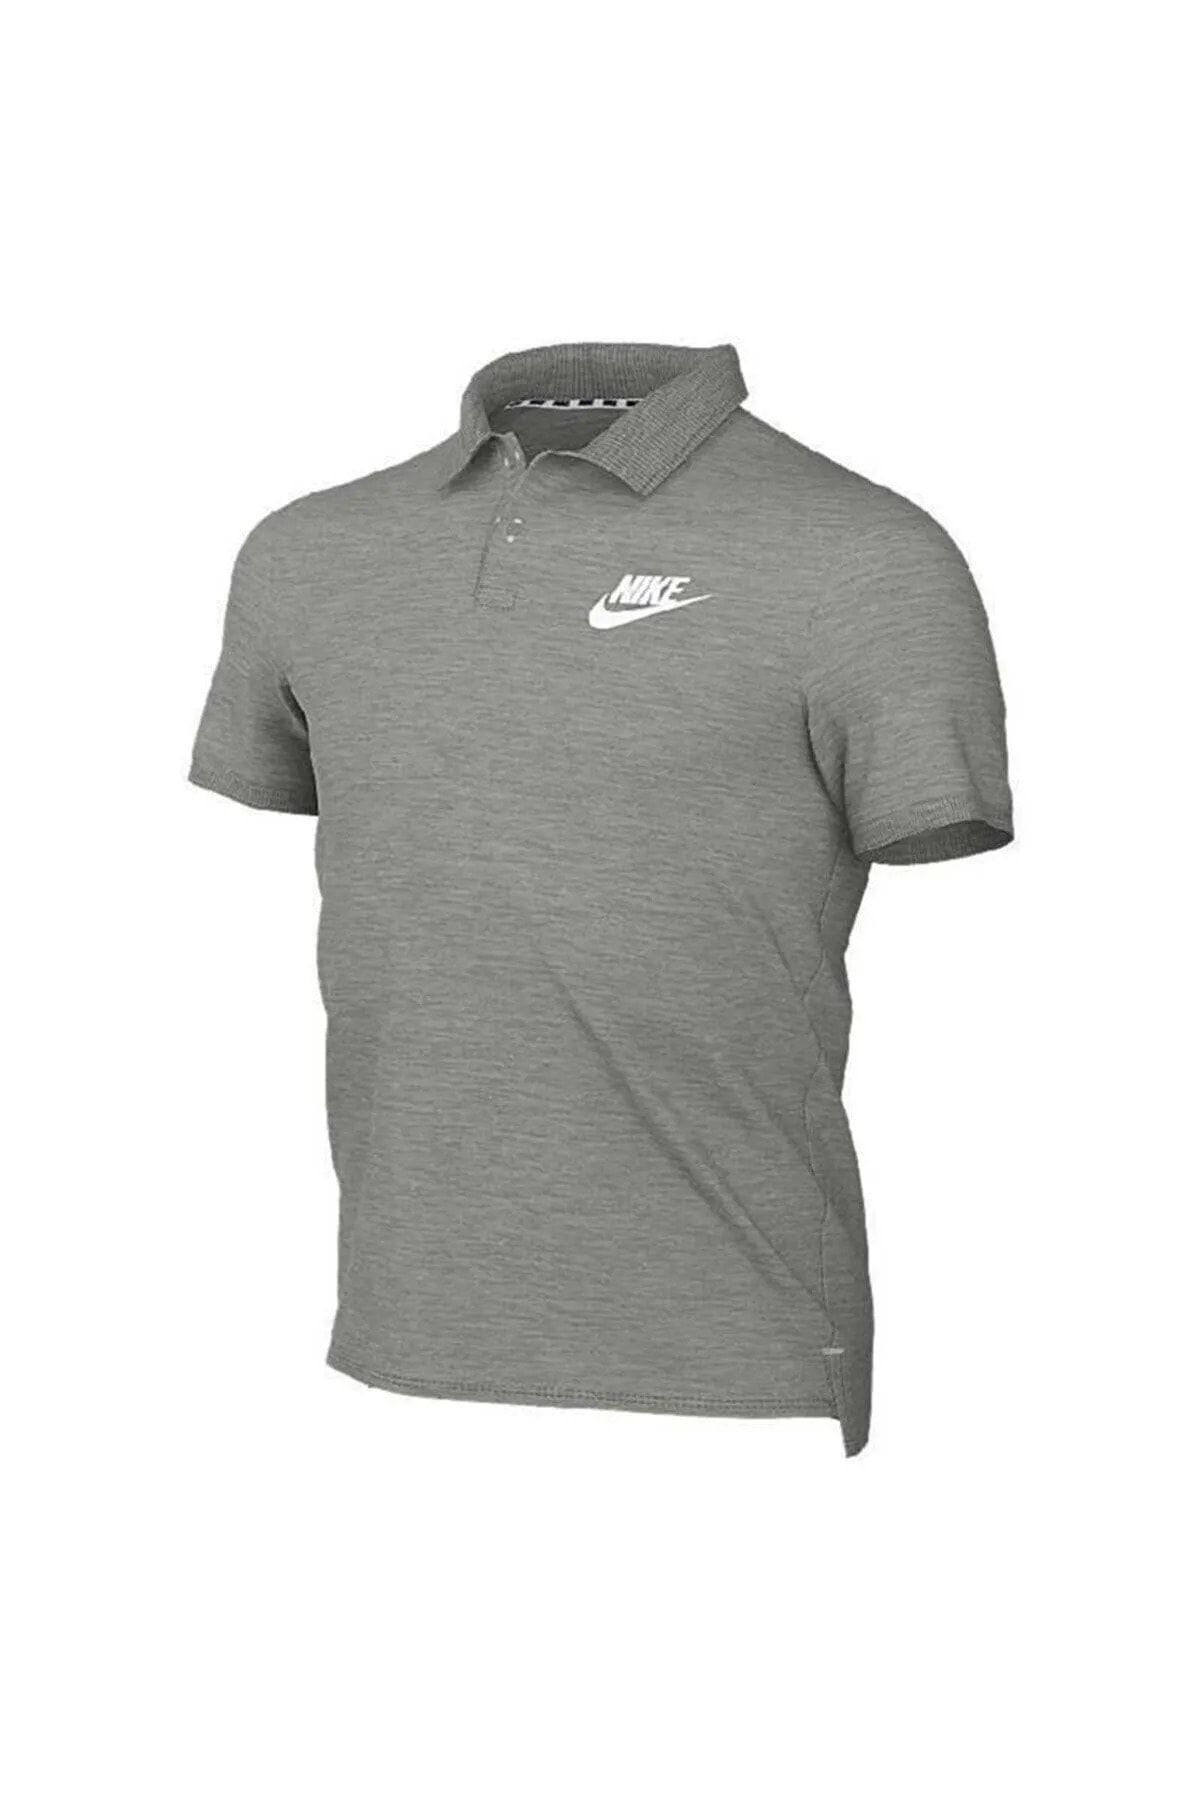 Nike sportswear unisex çocuk polo yaka gri t-shirt bq6395